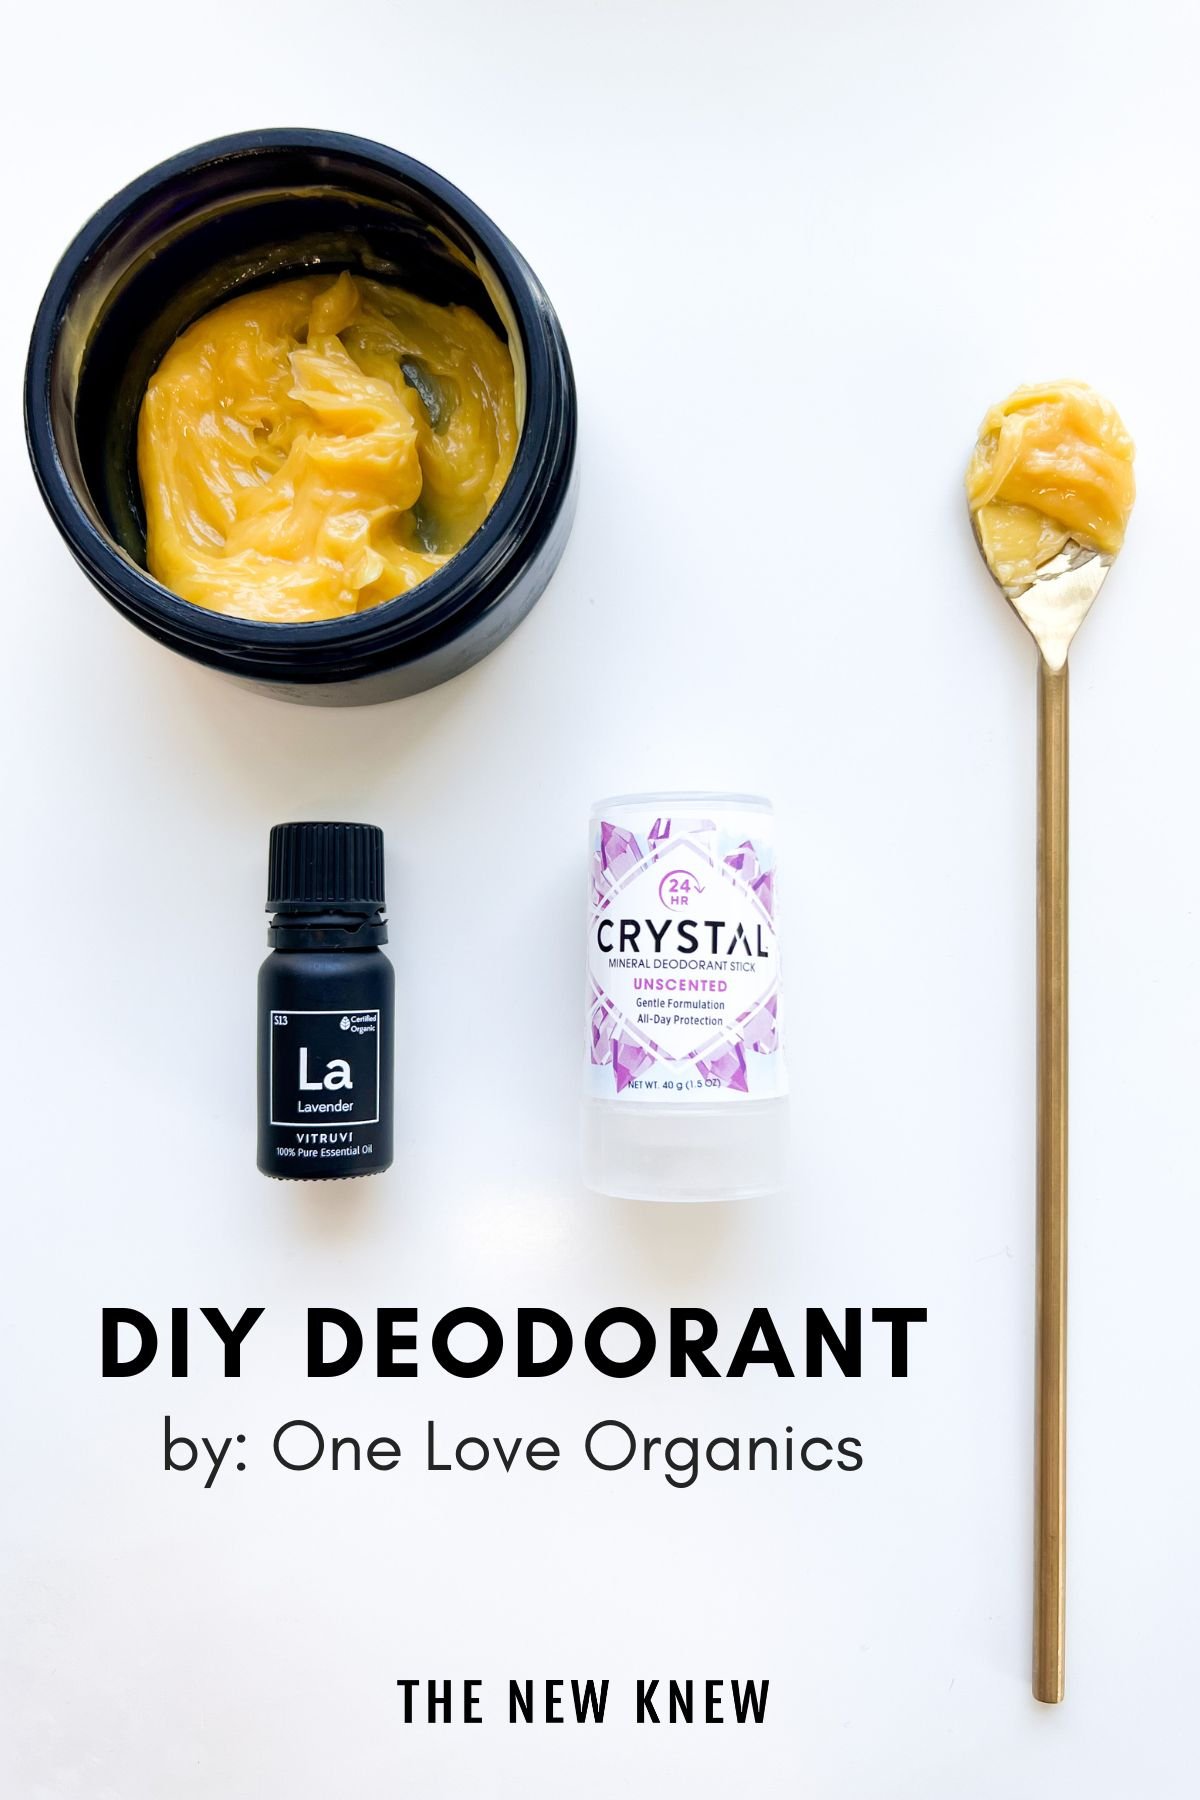 An image of ingredients for DIY deodorant.